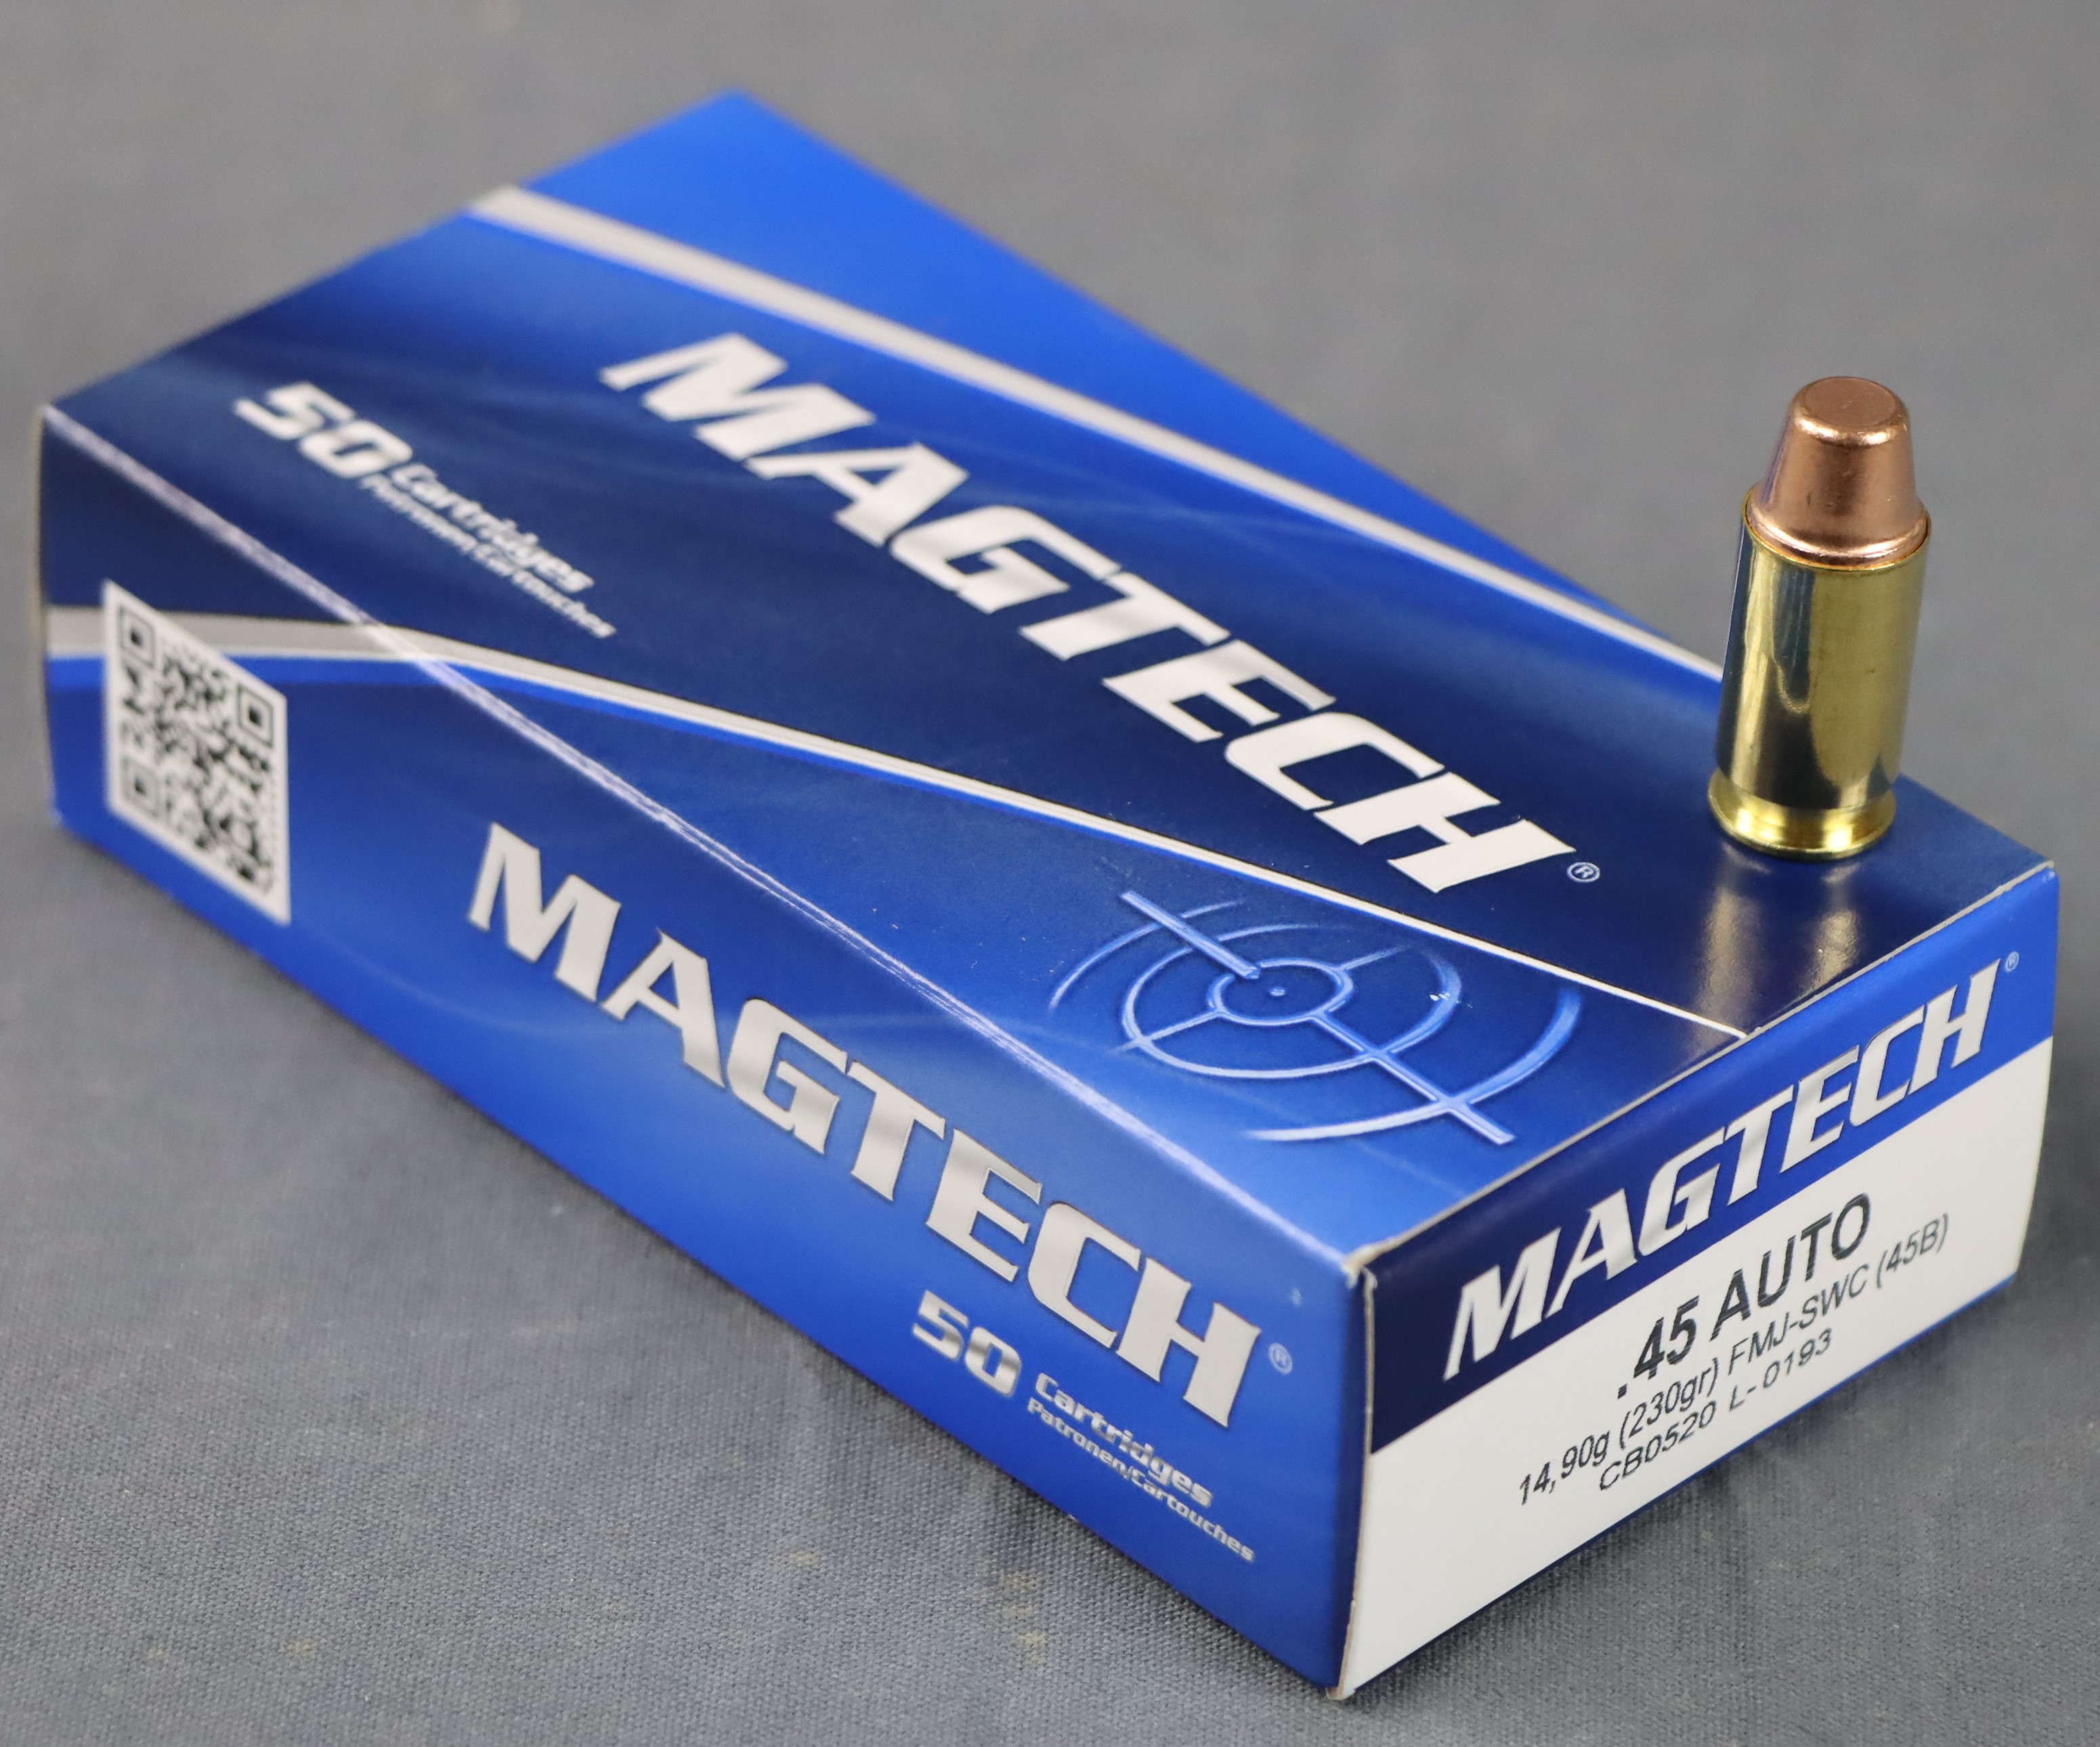 Magtech .45 ACP FMJ - SWC 230 grs (45B)